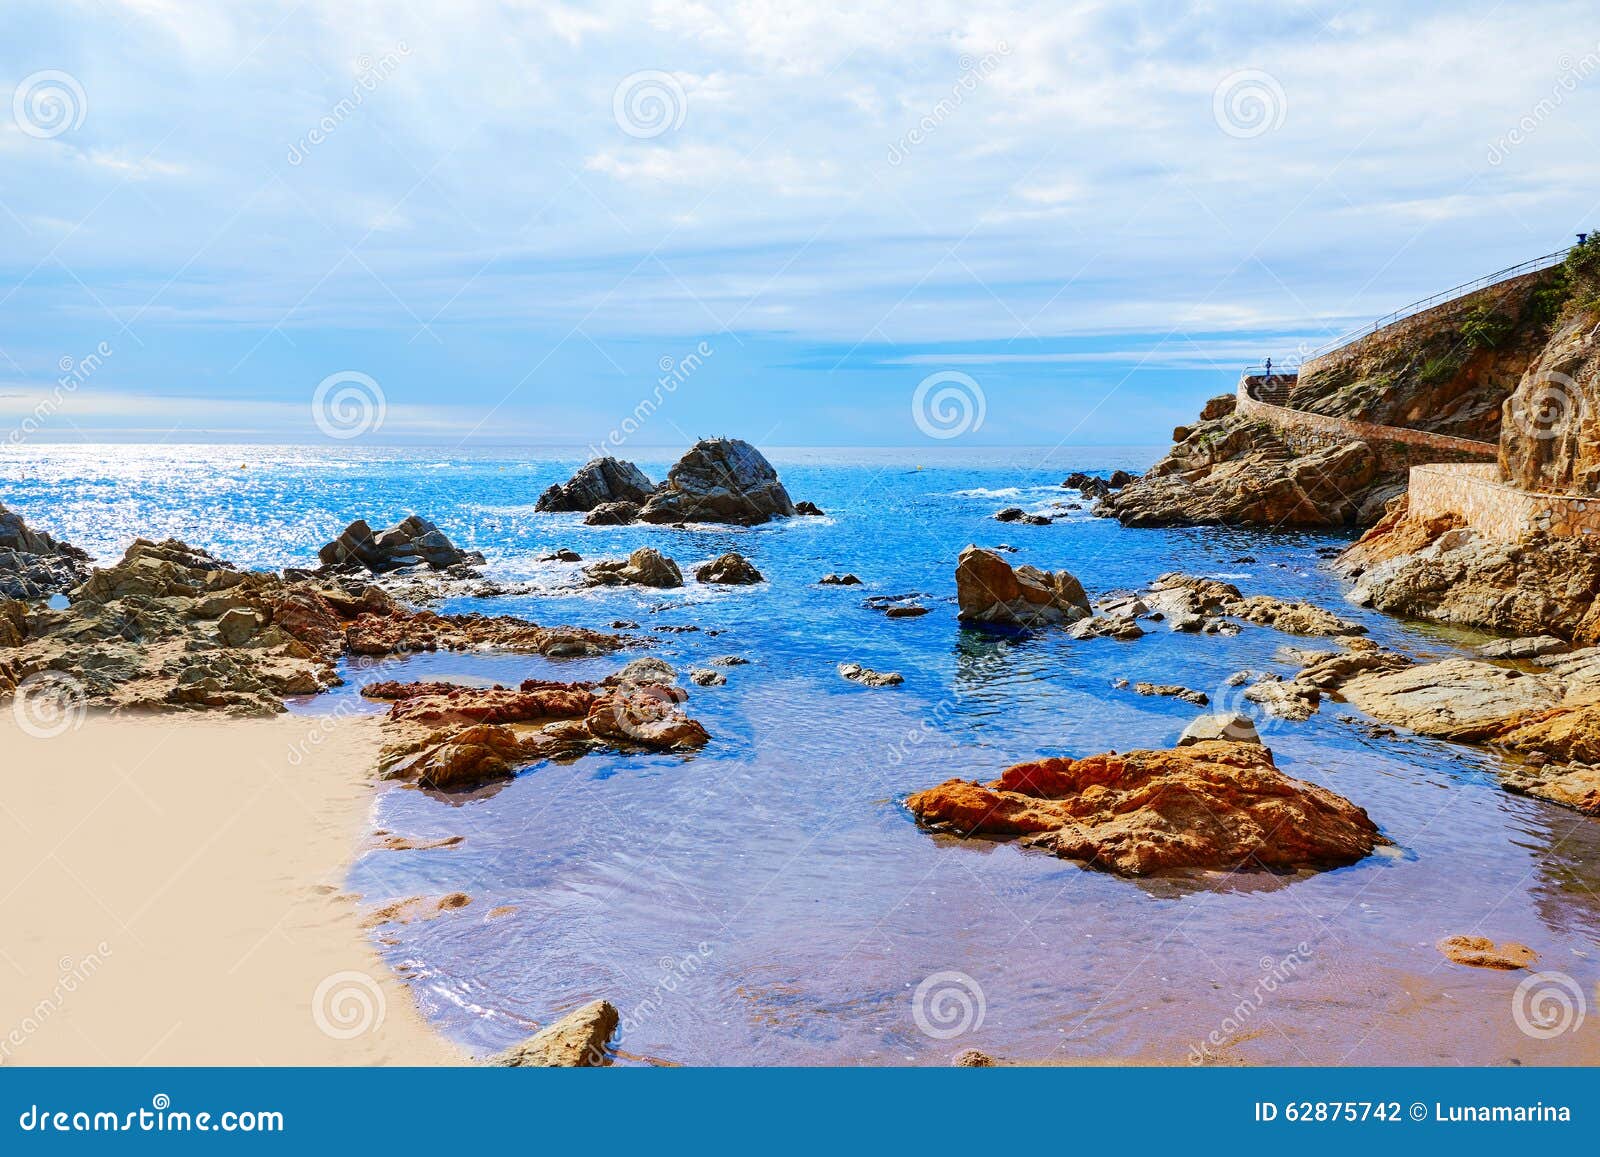 lloret de mar beach of costa brava catalonia